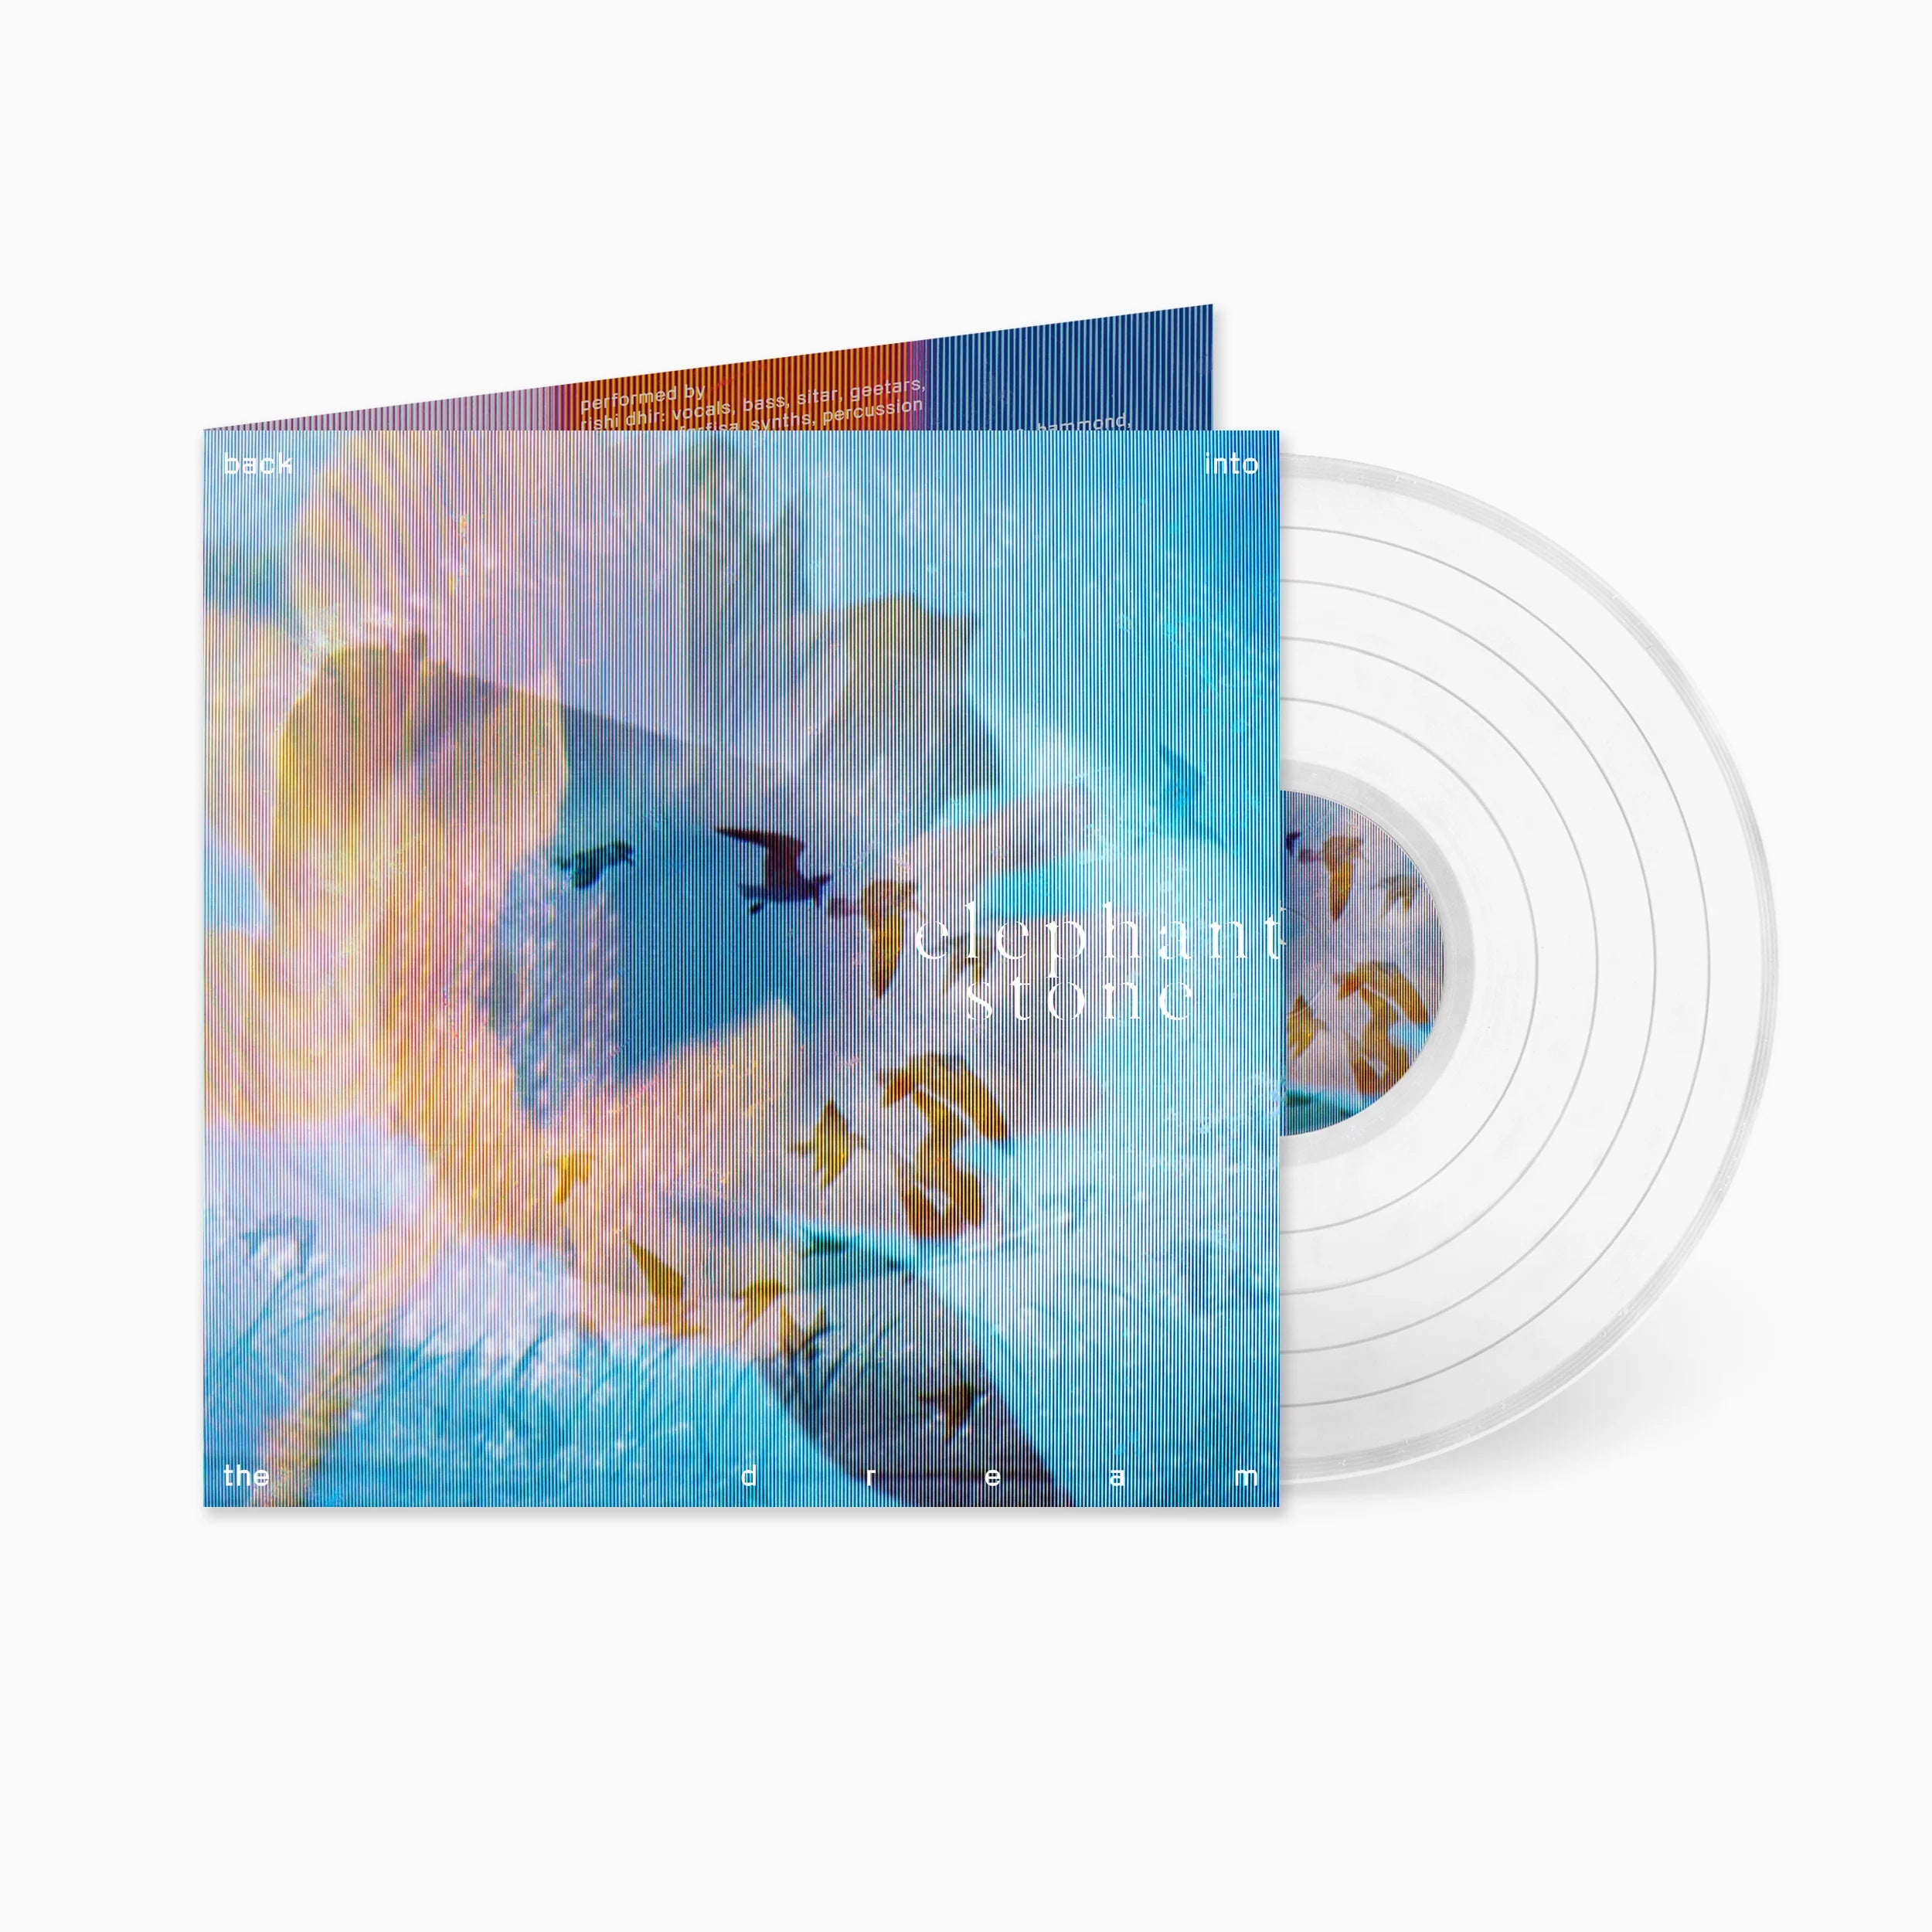 Elephant Stone - Back Into The Dream: Clear Vinyl LP